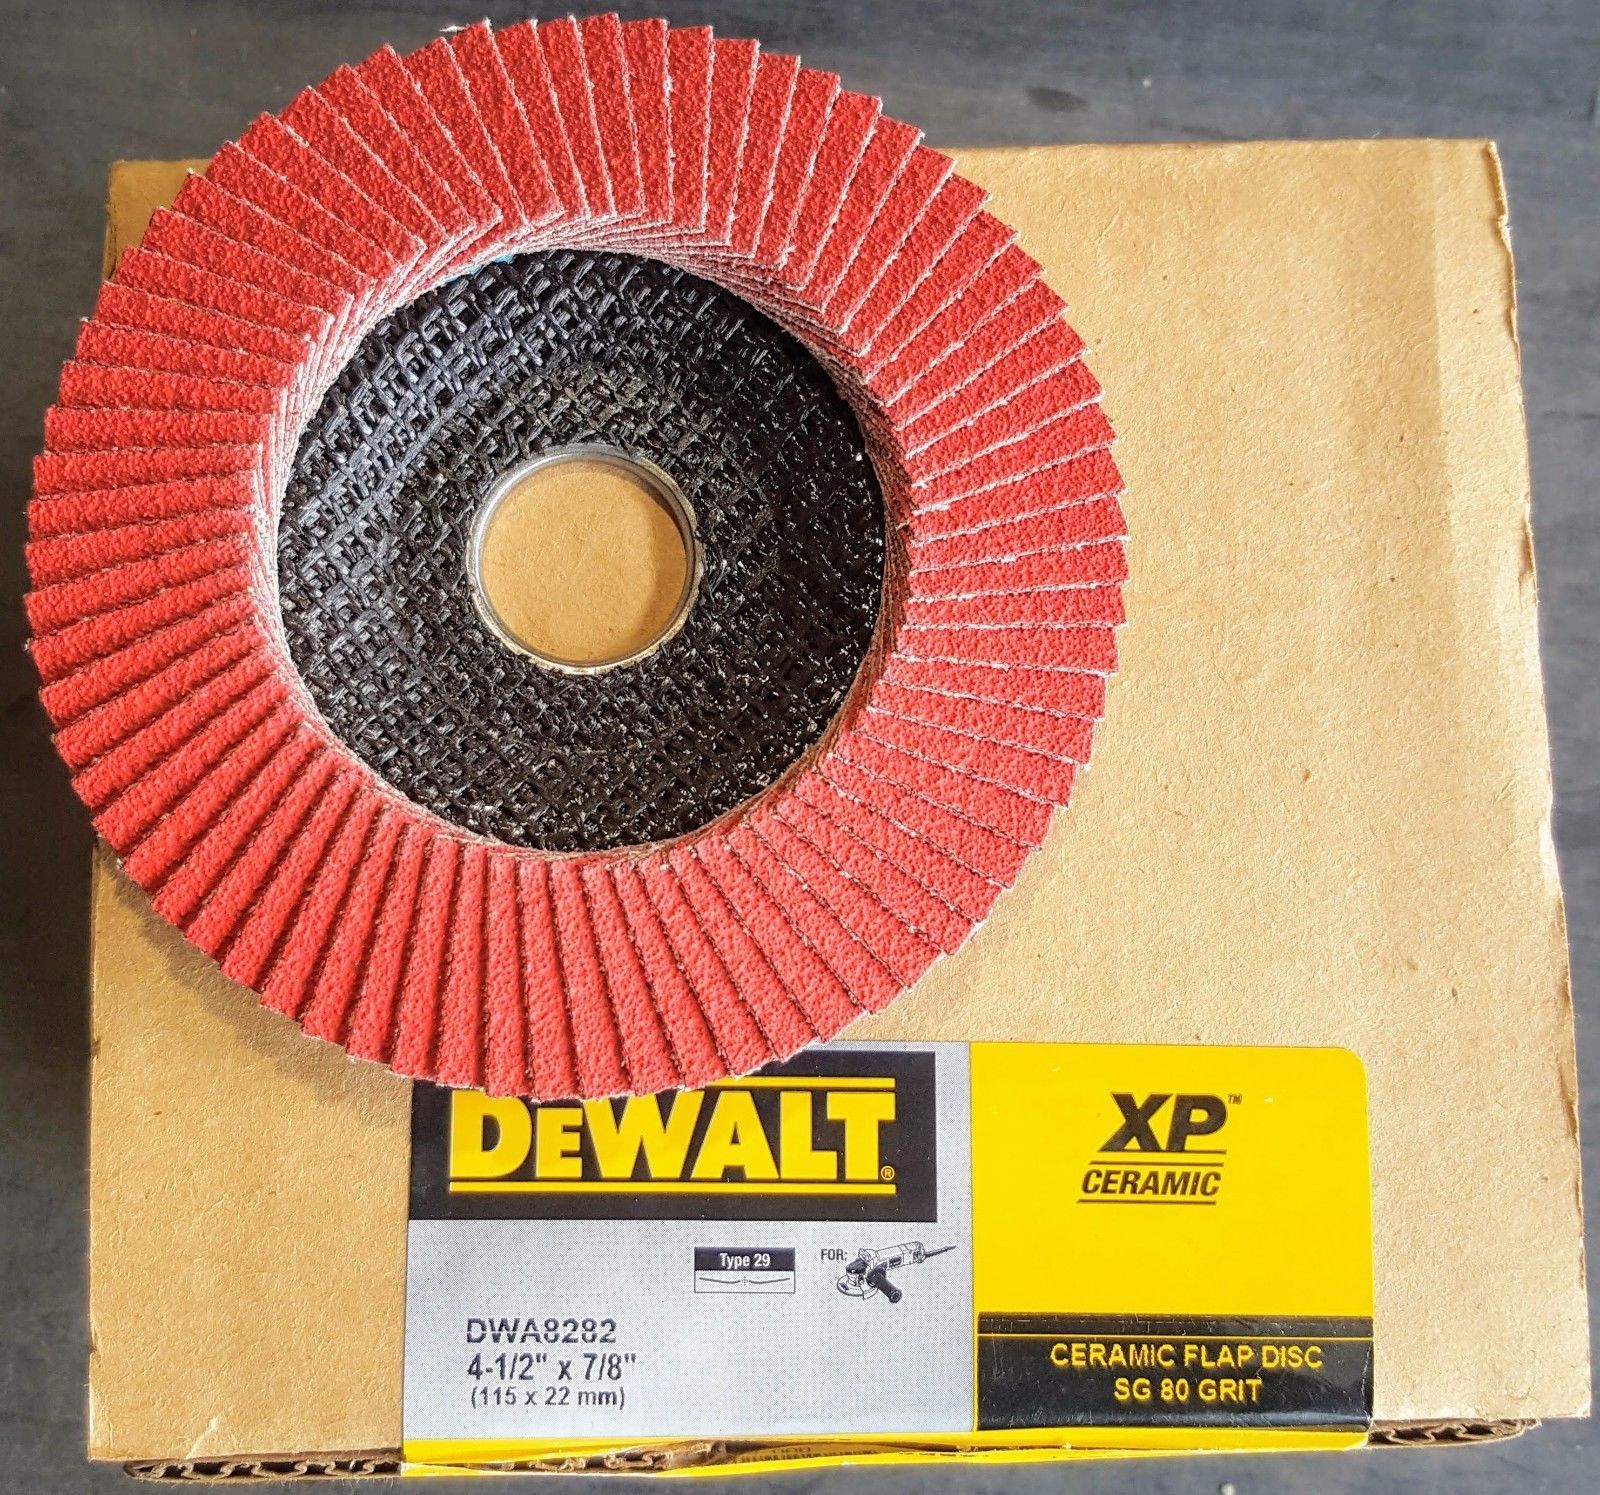 Dewalt DWA8282 4-1/2" x 7/8" 80Grit T29 XP Ceramic Flap Discs 10 Pack